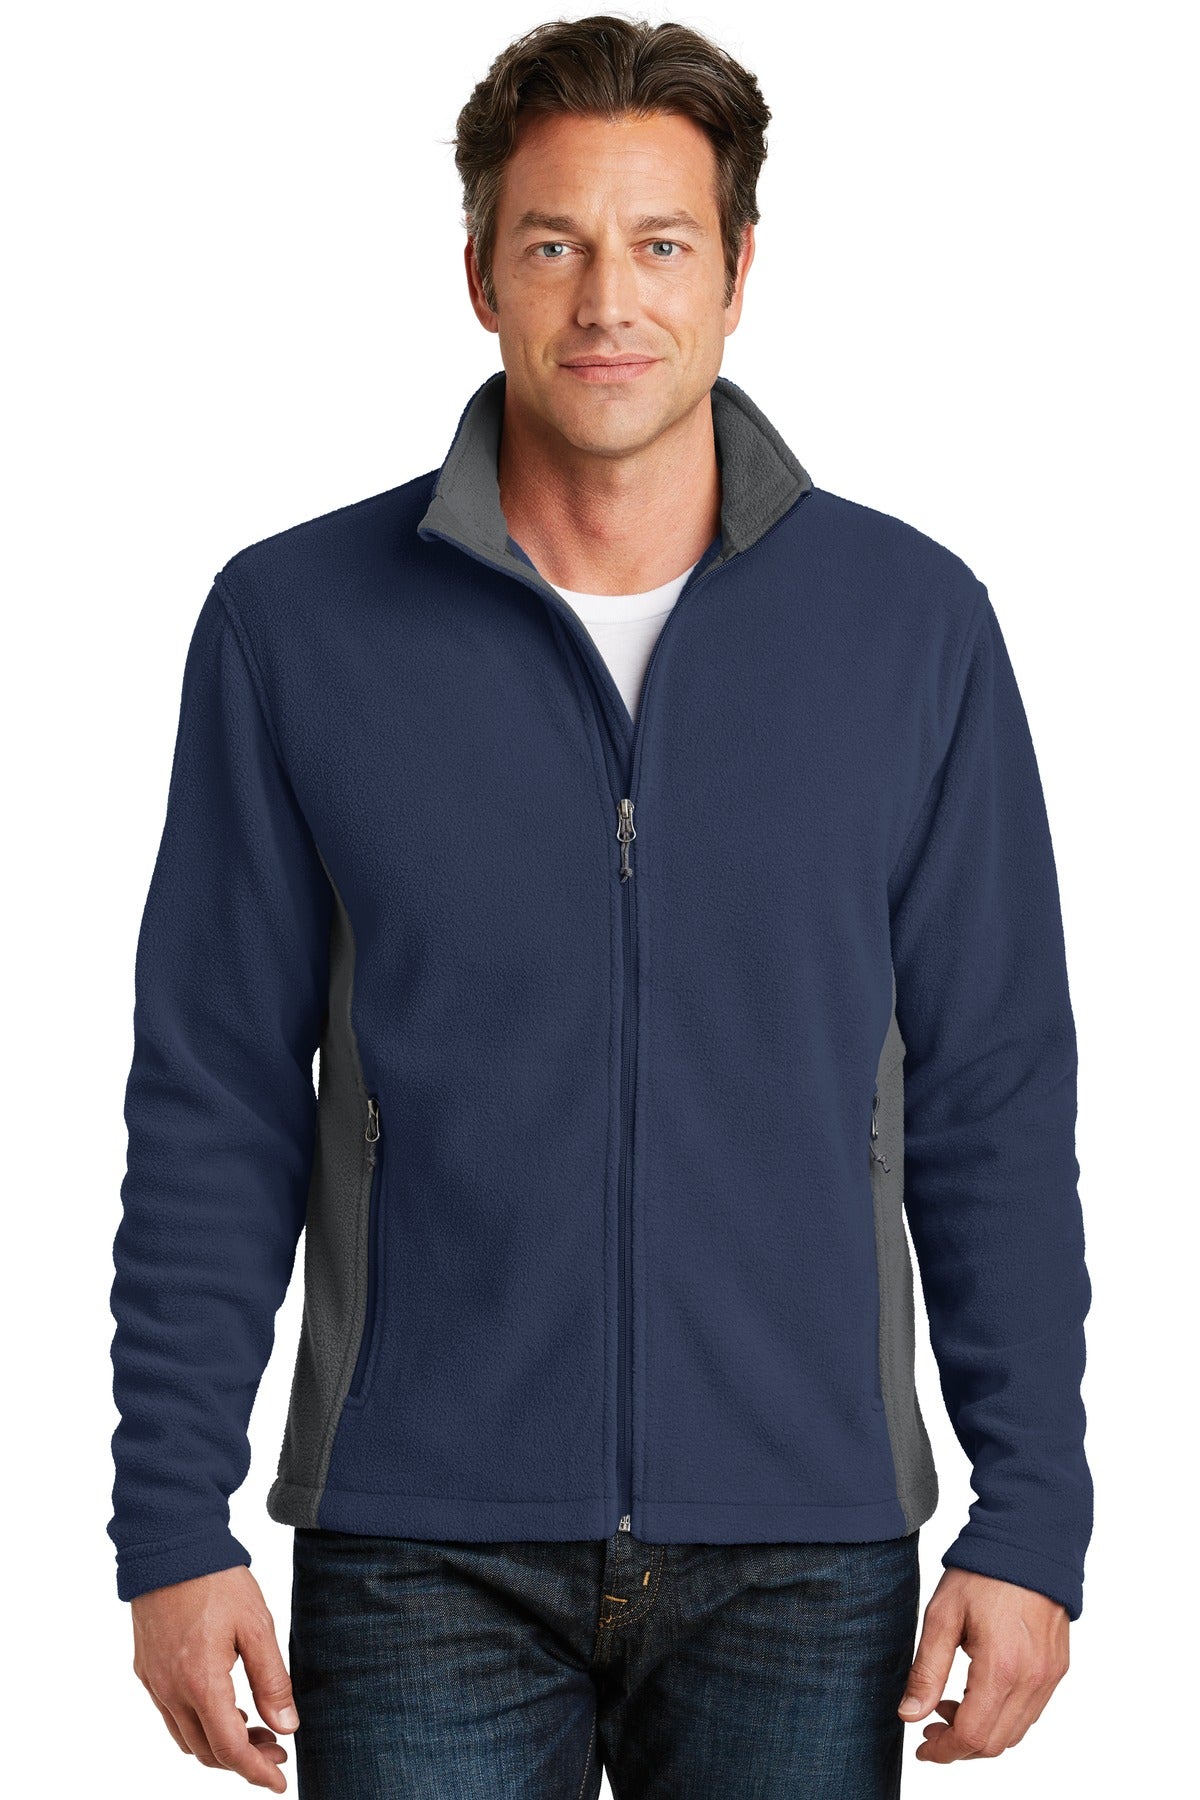 Port Authority® Colorblock Value Fleece Jacket. F216 - DFW Impression